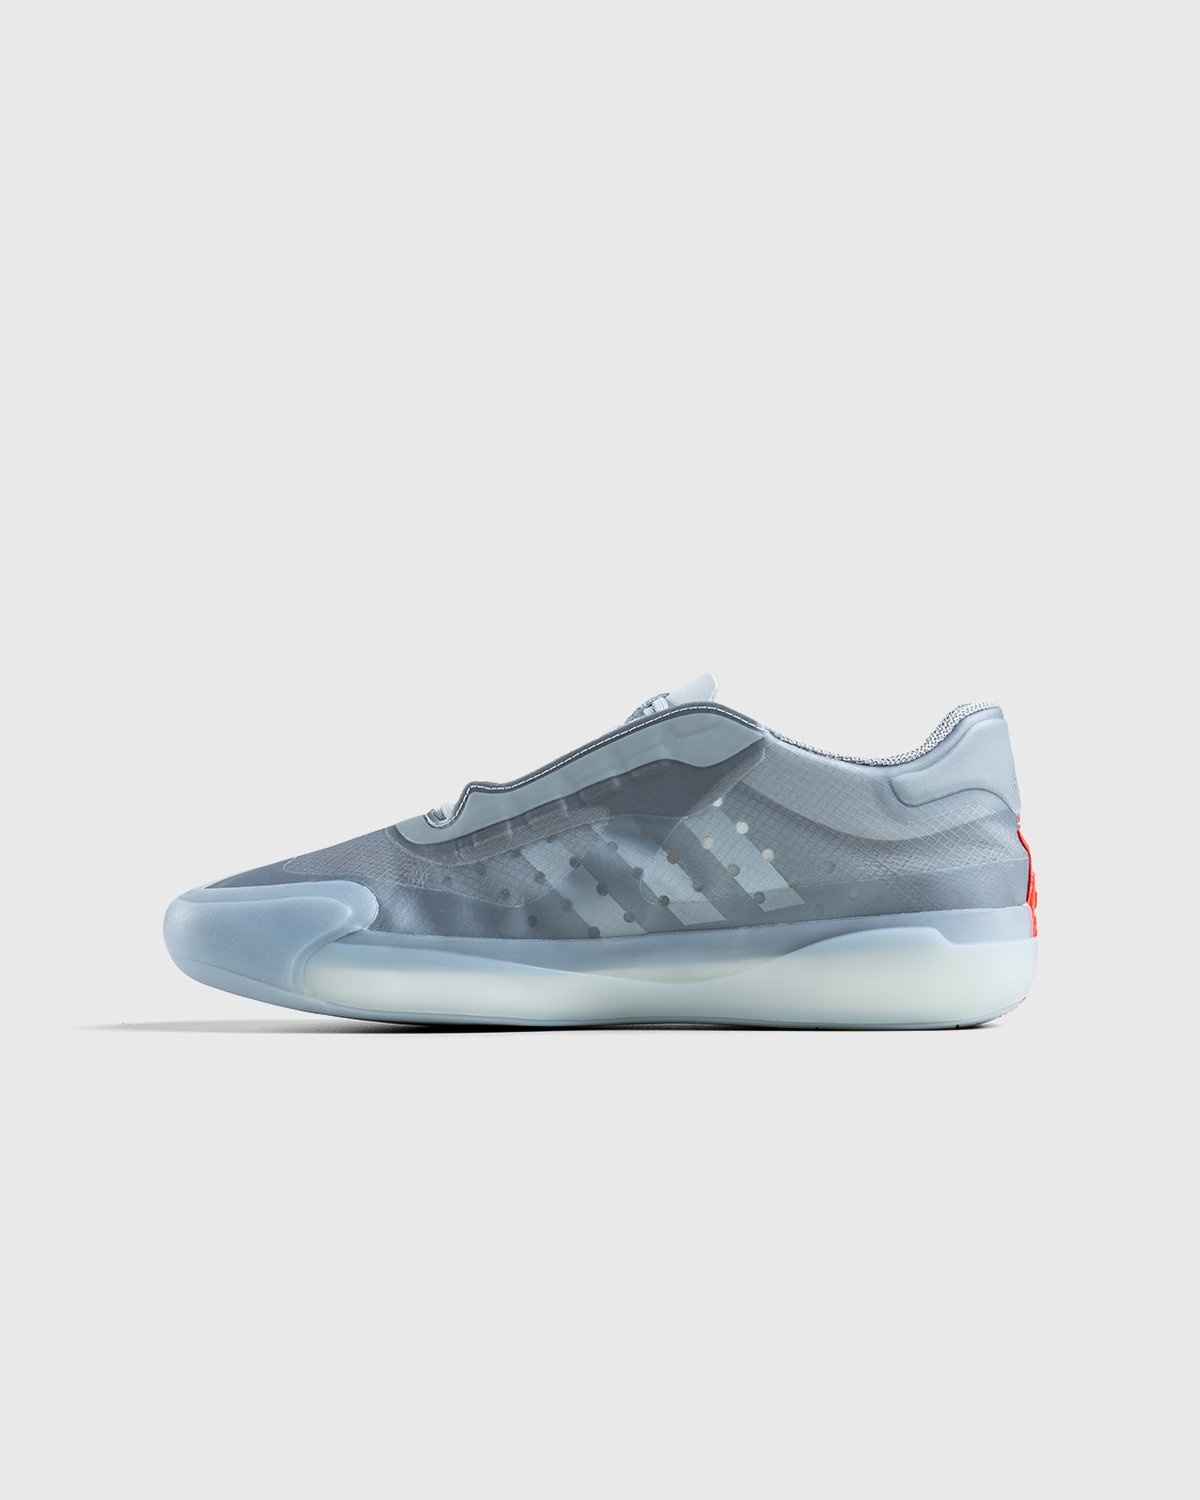 Adidas x Prada – A+P Luna Rossa 21 Performance - Sneakers - Grey - Image 2